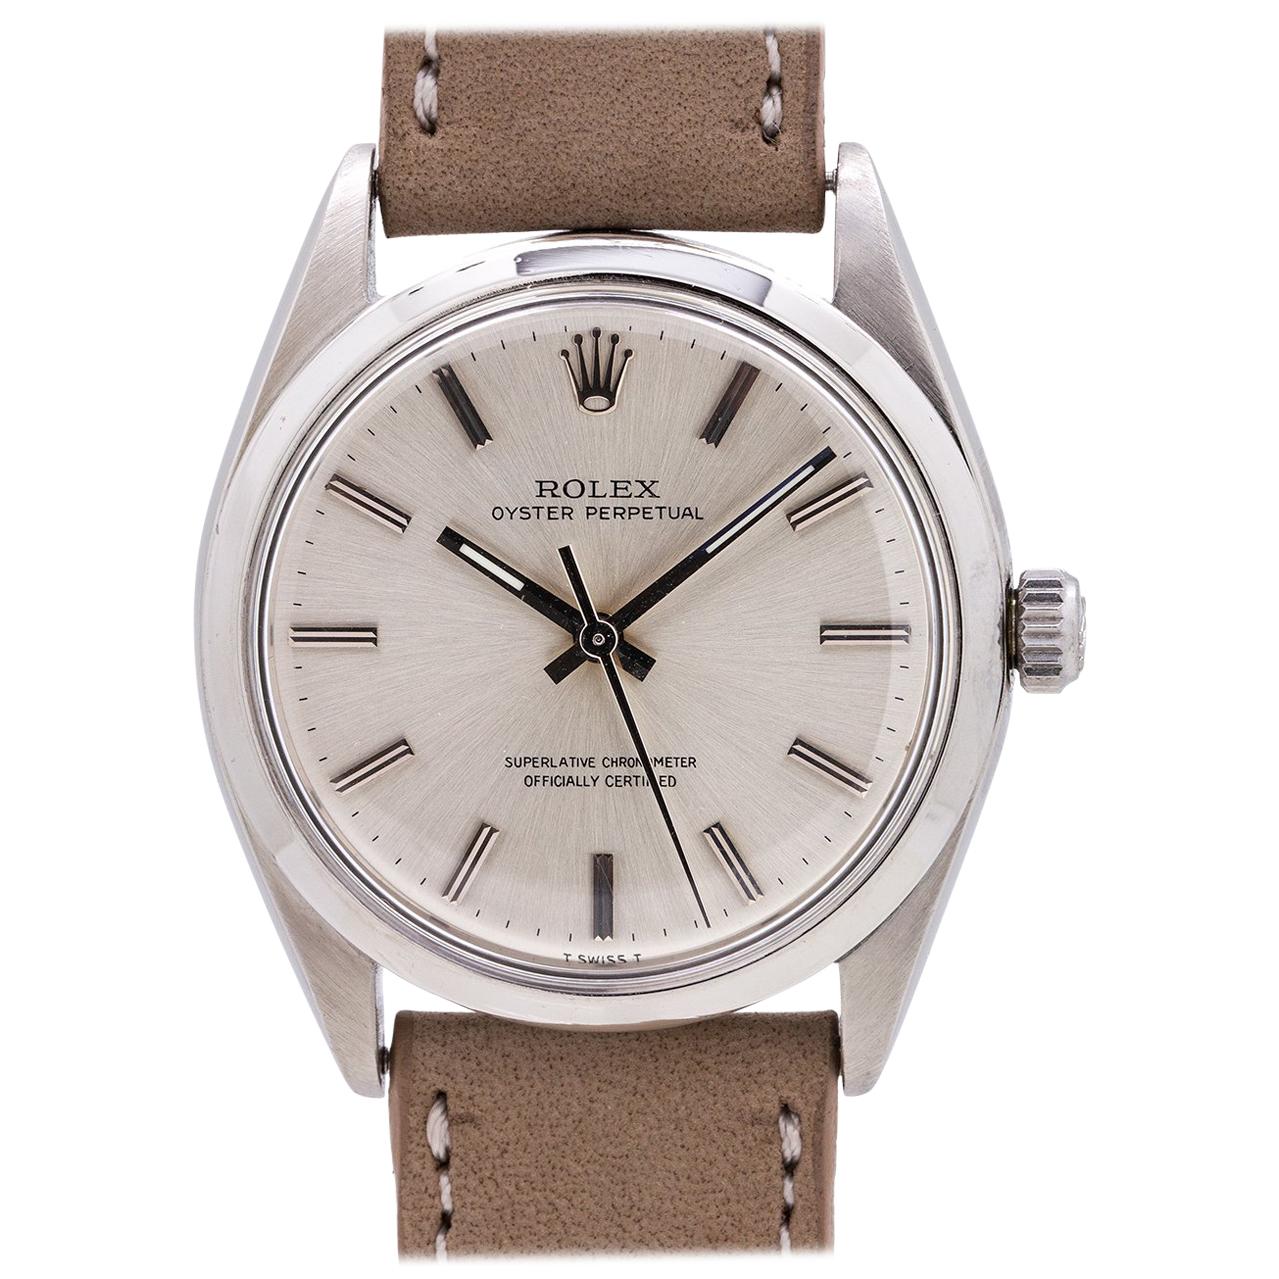 Rolex Oyster Perpetual Ref 1002 Chronometer, circa 1966